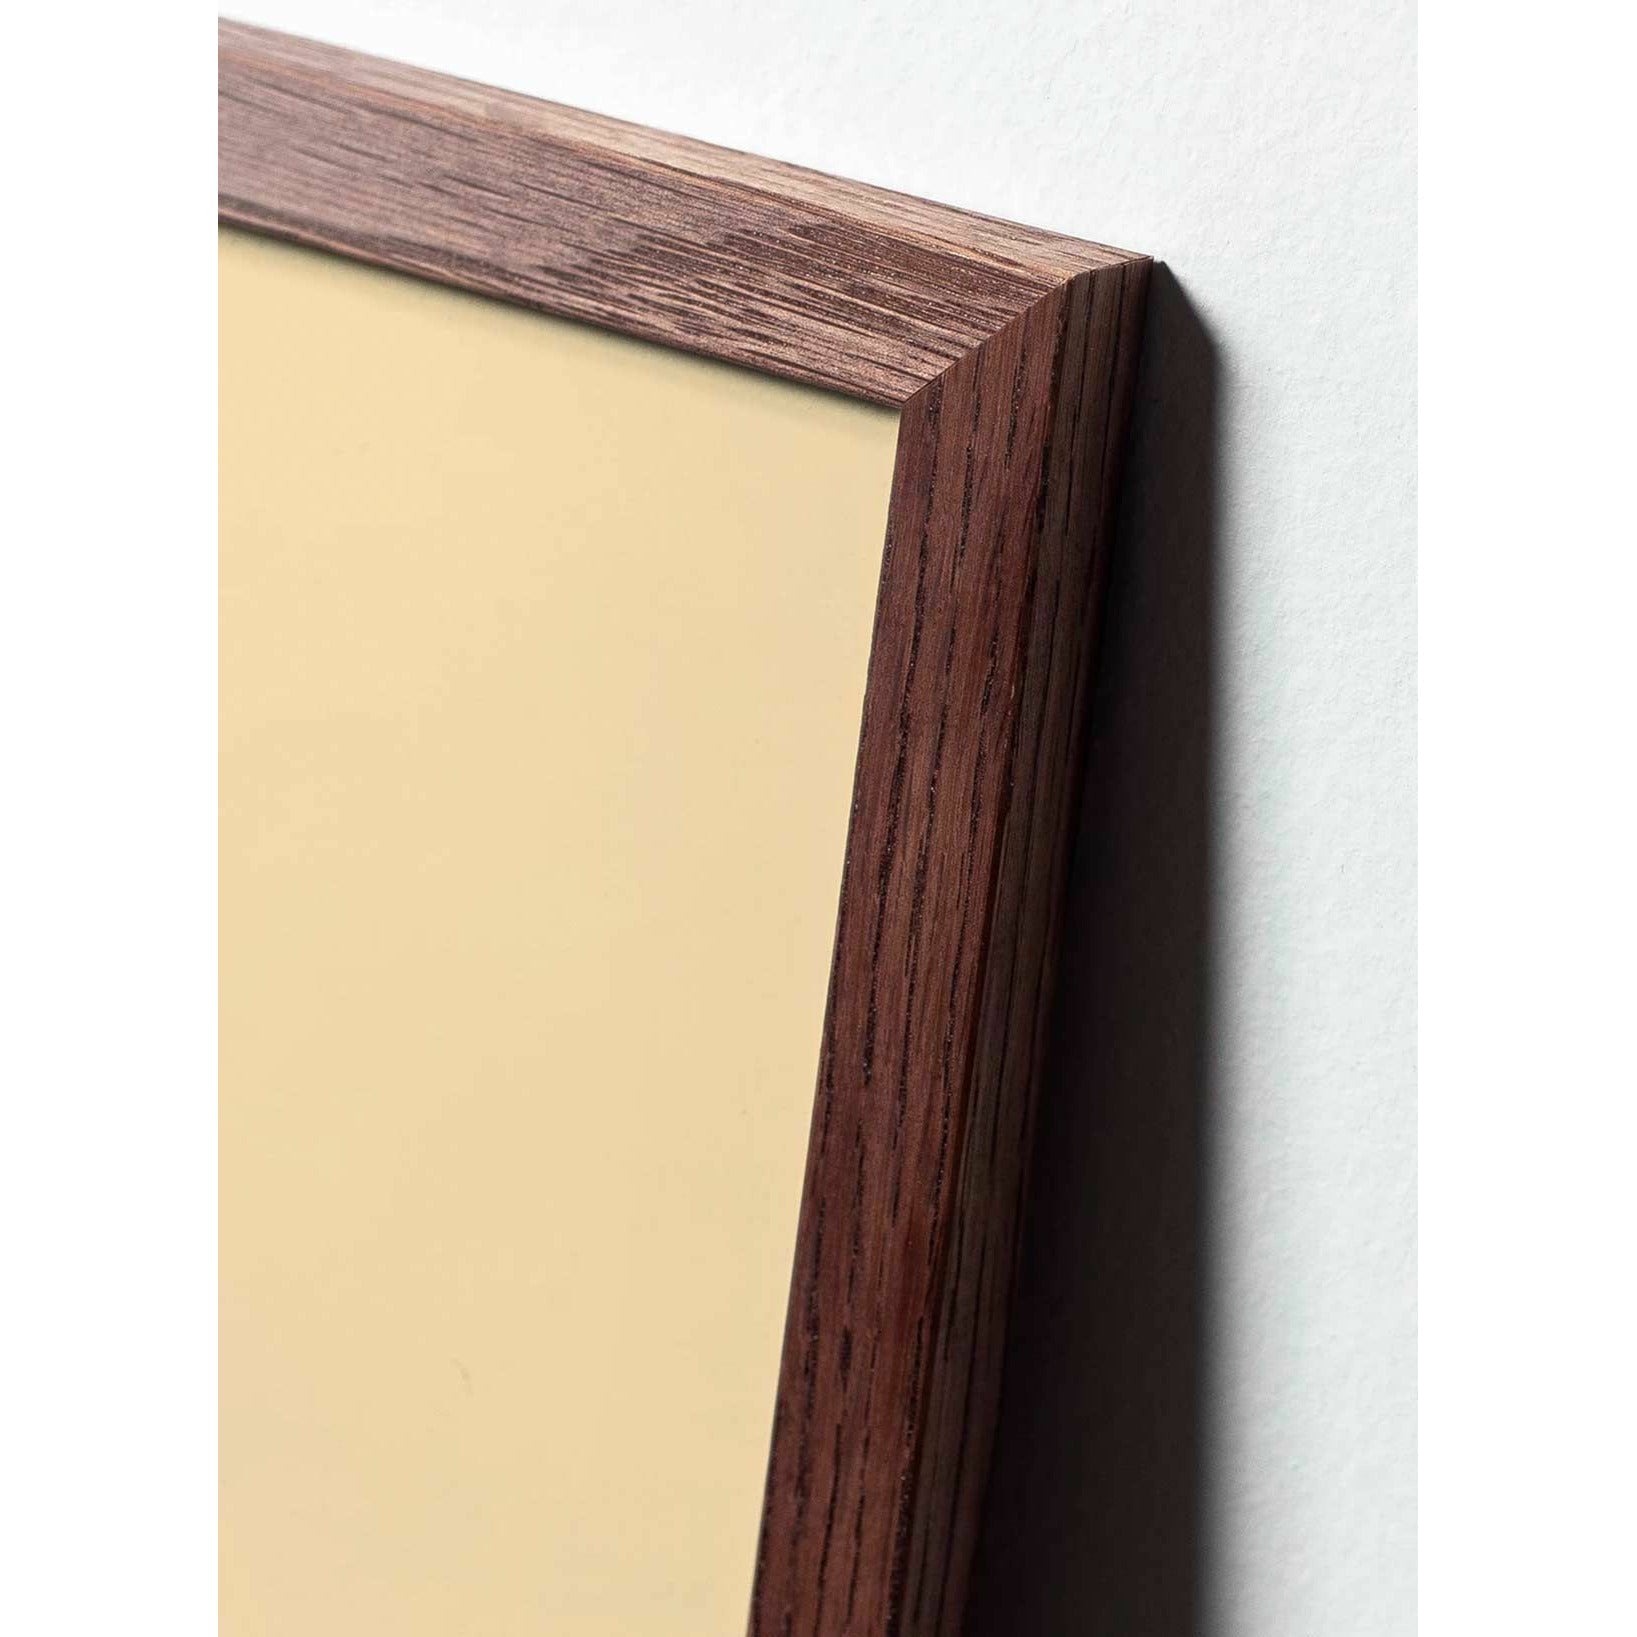 Póster clásico de hormigas de creación, marco de madera oscura 30x40 cm, fondo de color arena